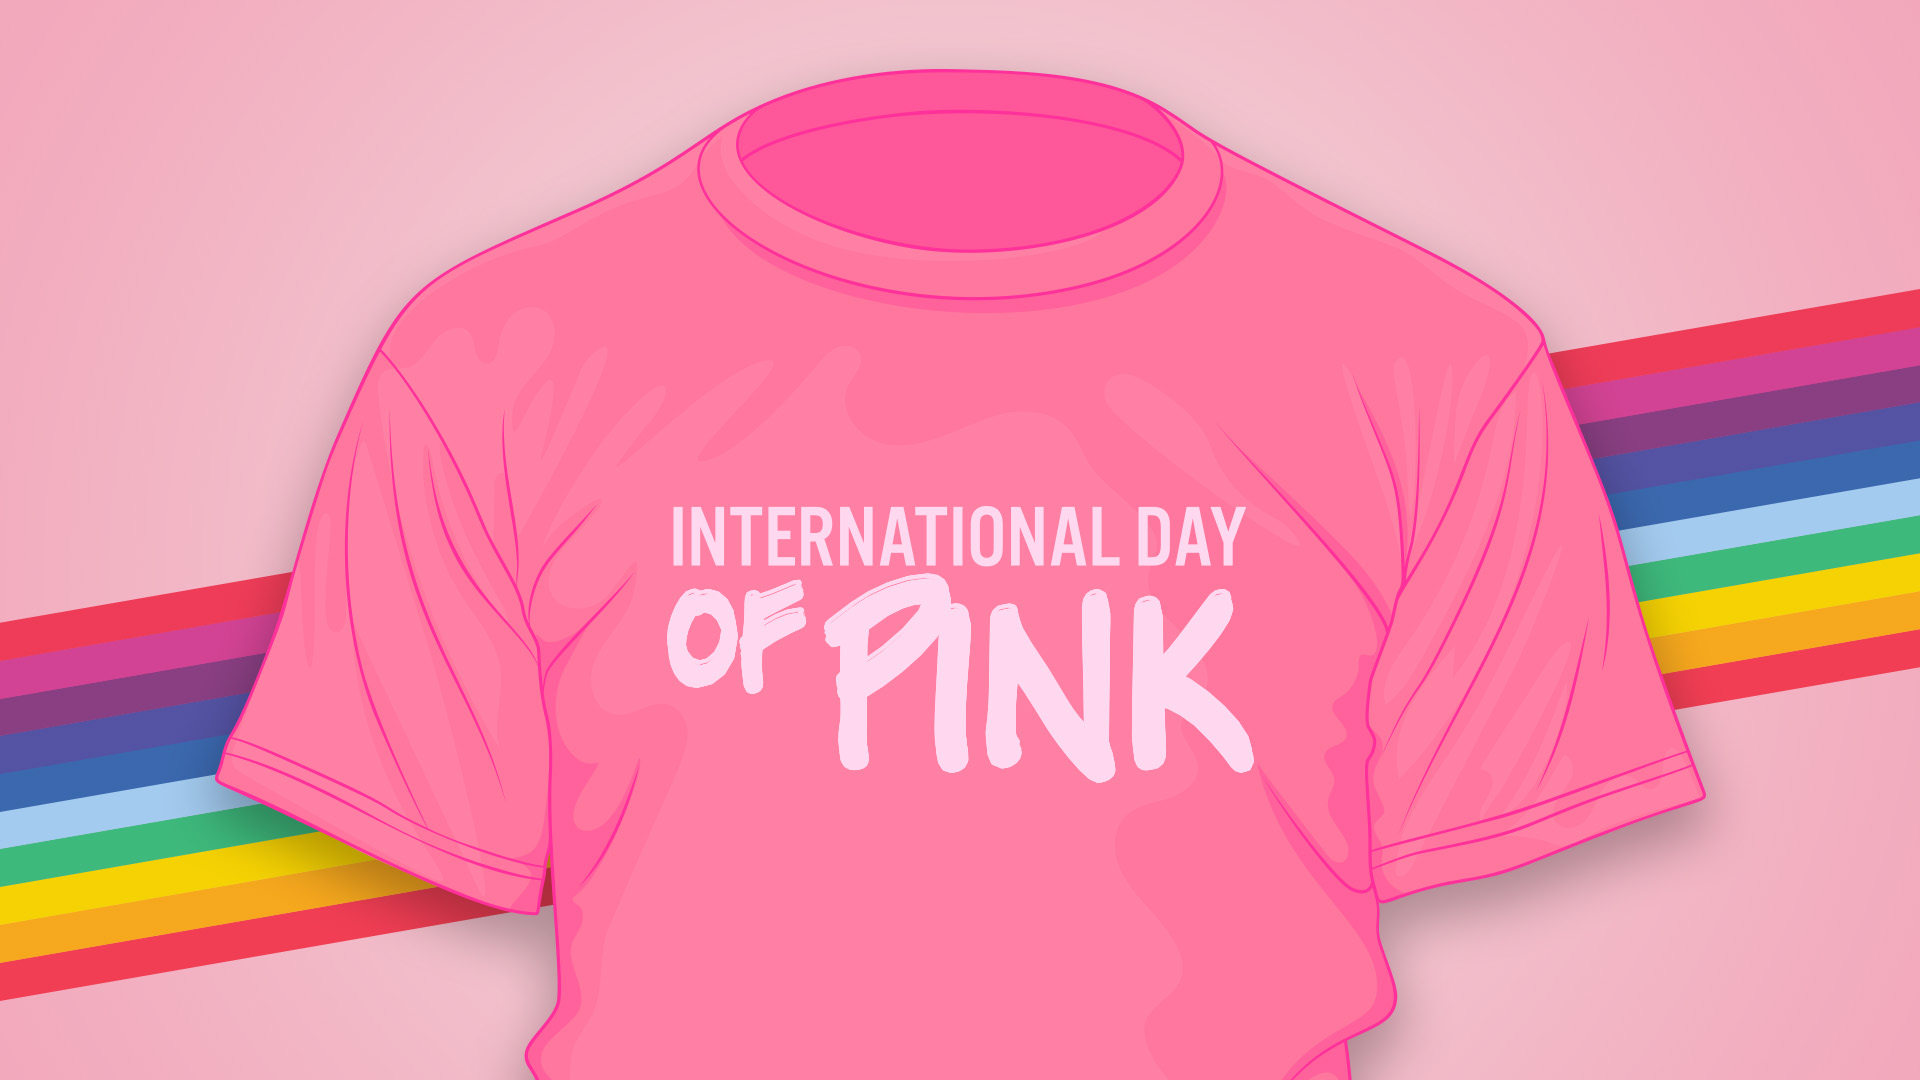 International Day of Pink